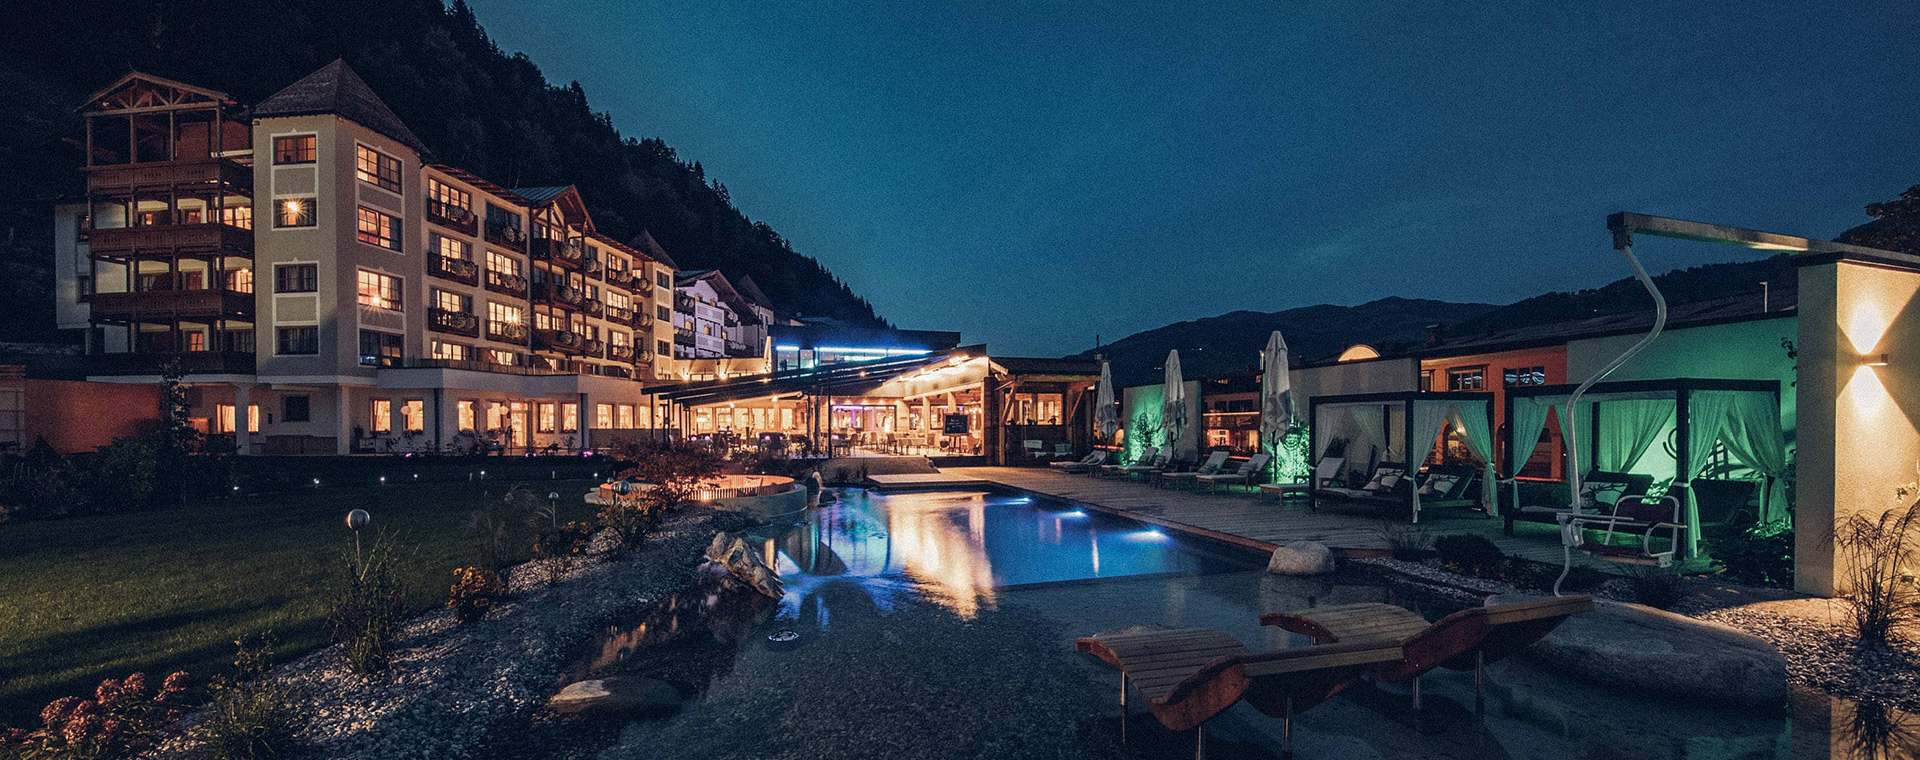 Sporthotel Alpenblick Winterurlaub Family-Hotel Zell am See Salzburger Land